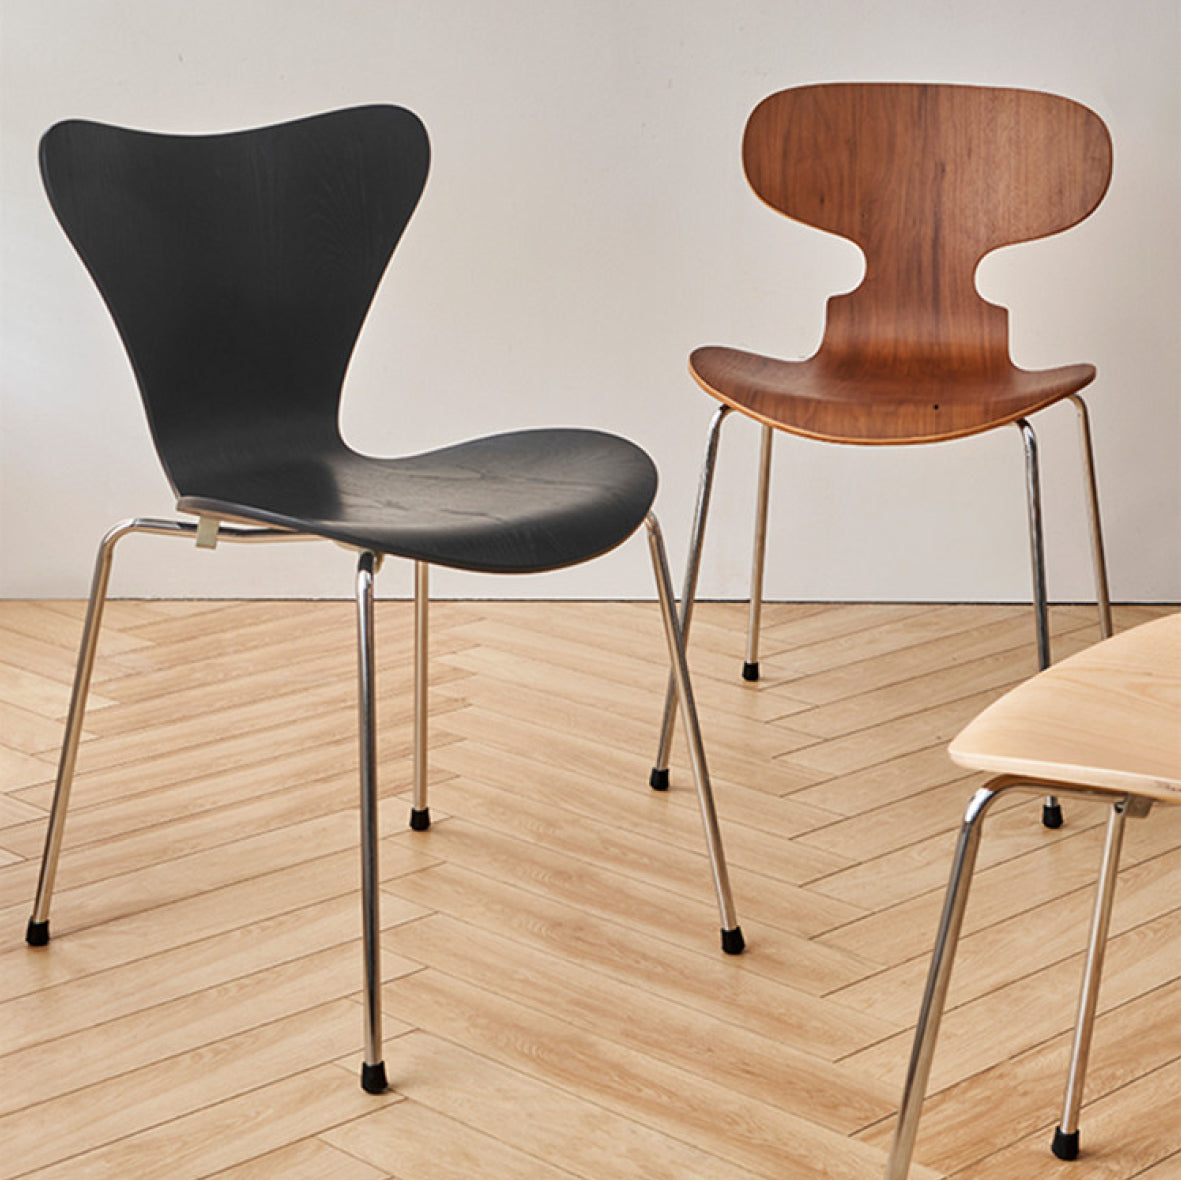 Art Wooden Ant Chair Design B